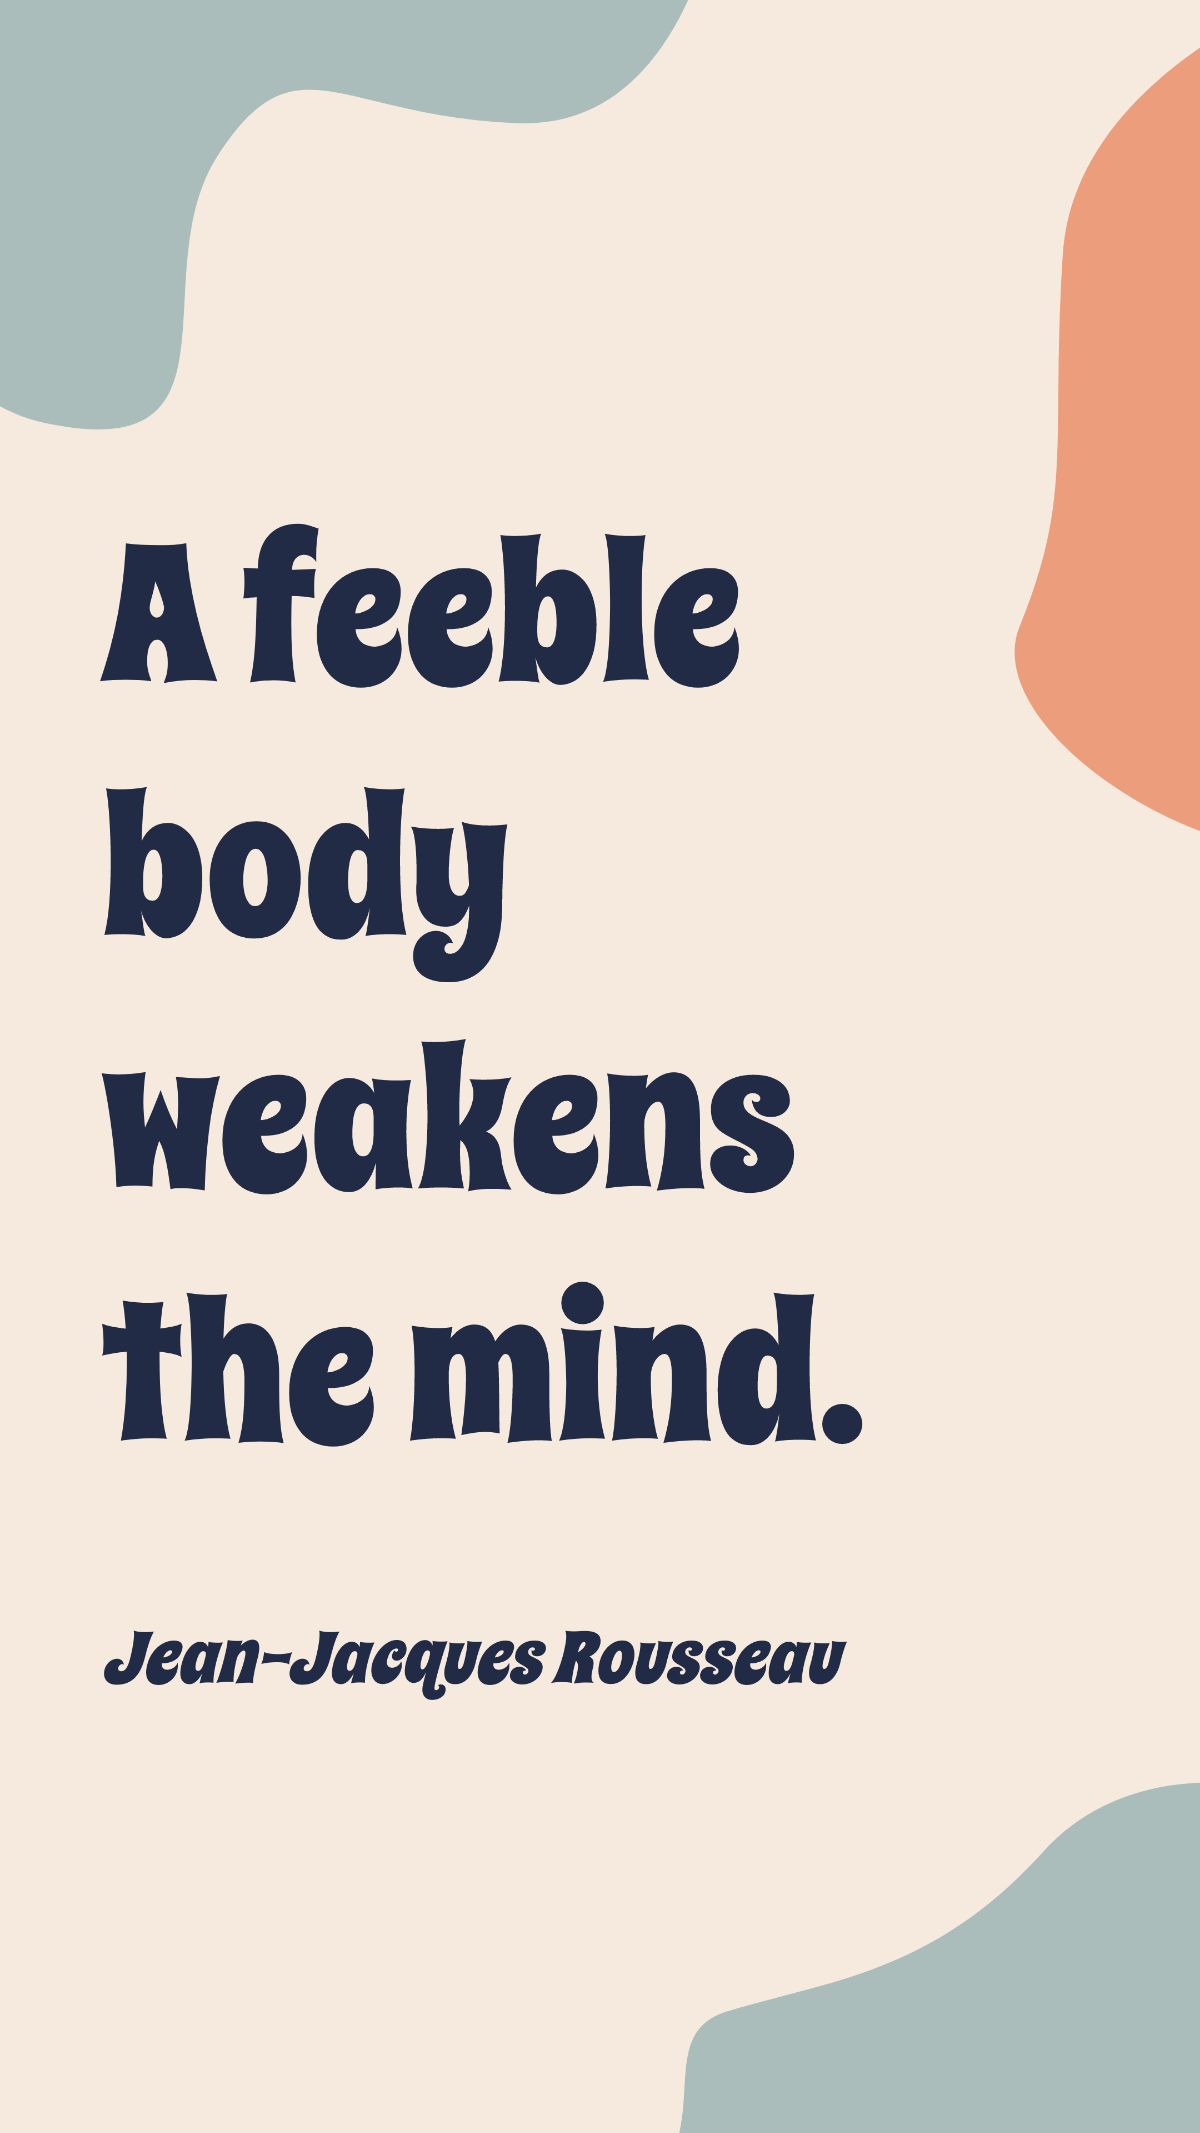 Jean-Jacques Rousseau - A feeble body weakens the mind.